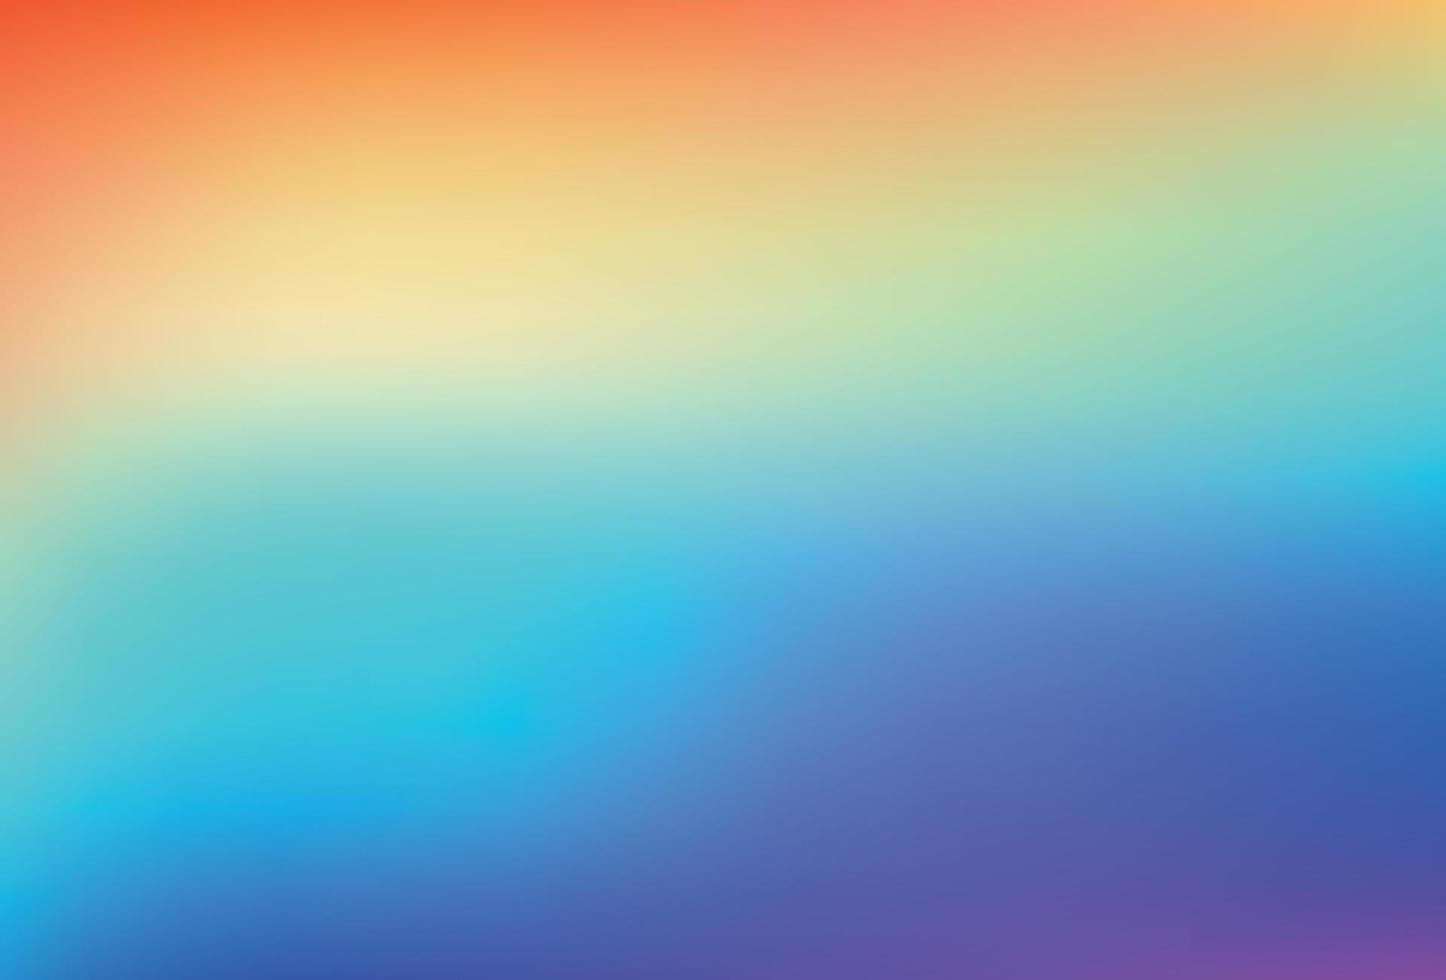 fondo degradado del arco iris. papel digital arcoiris. vector